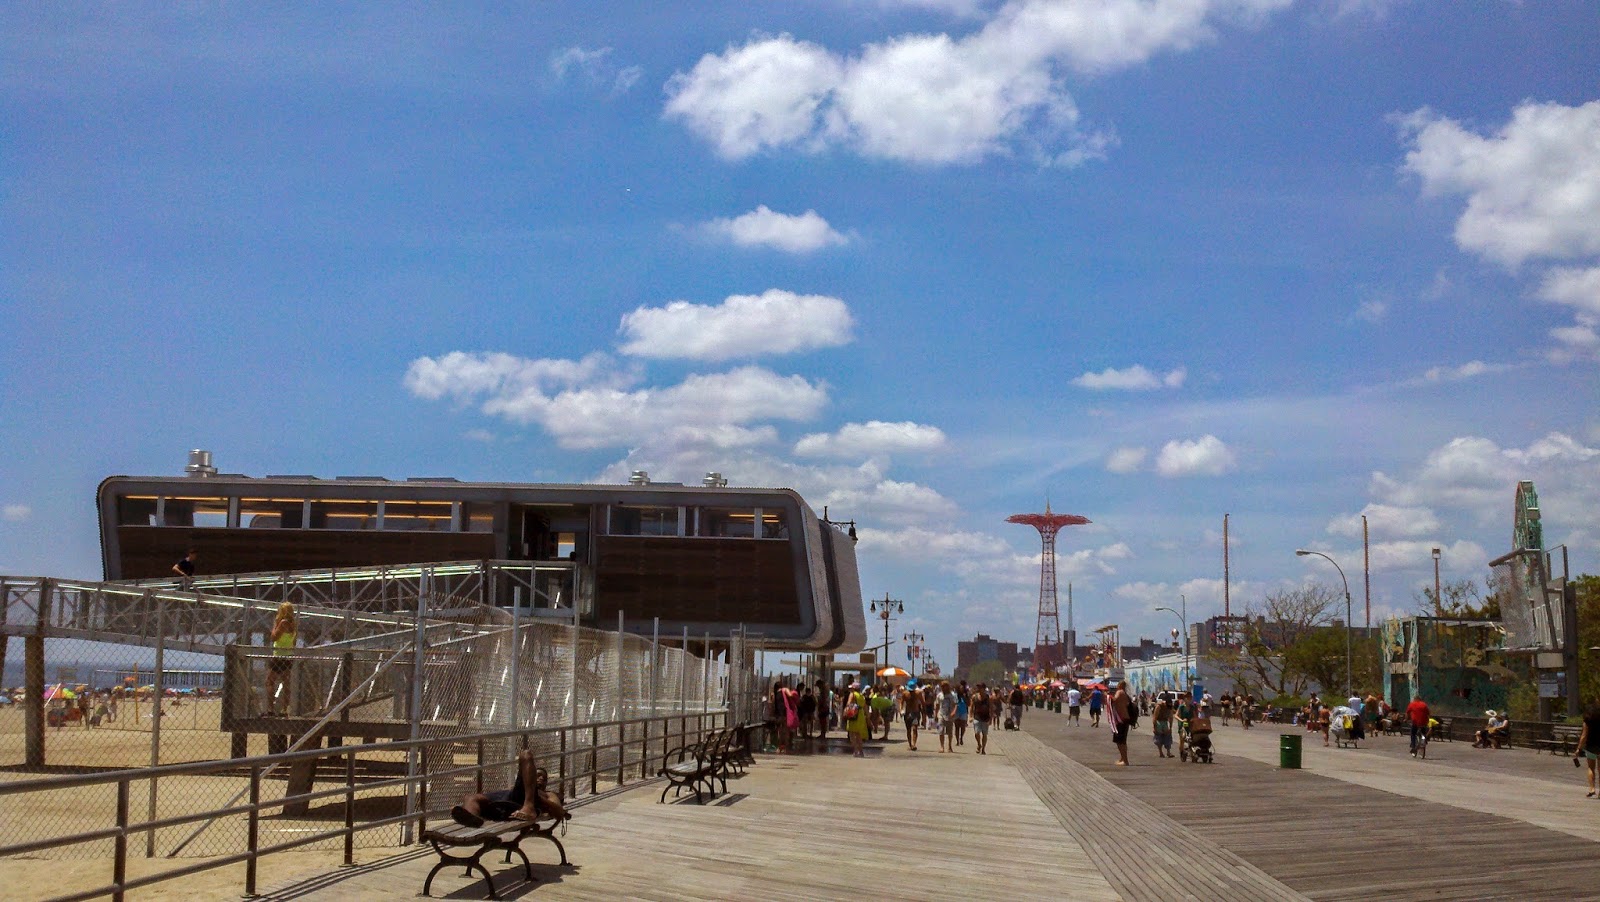 Coney Island boardwalk, Parachute Jump ride in the distance